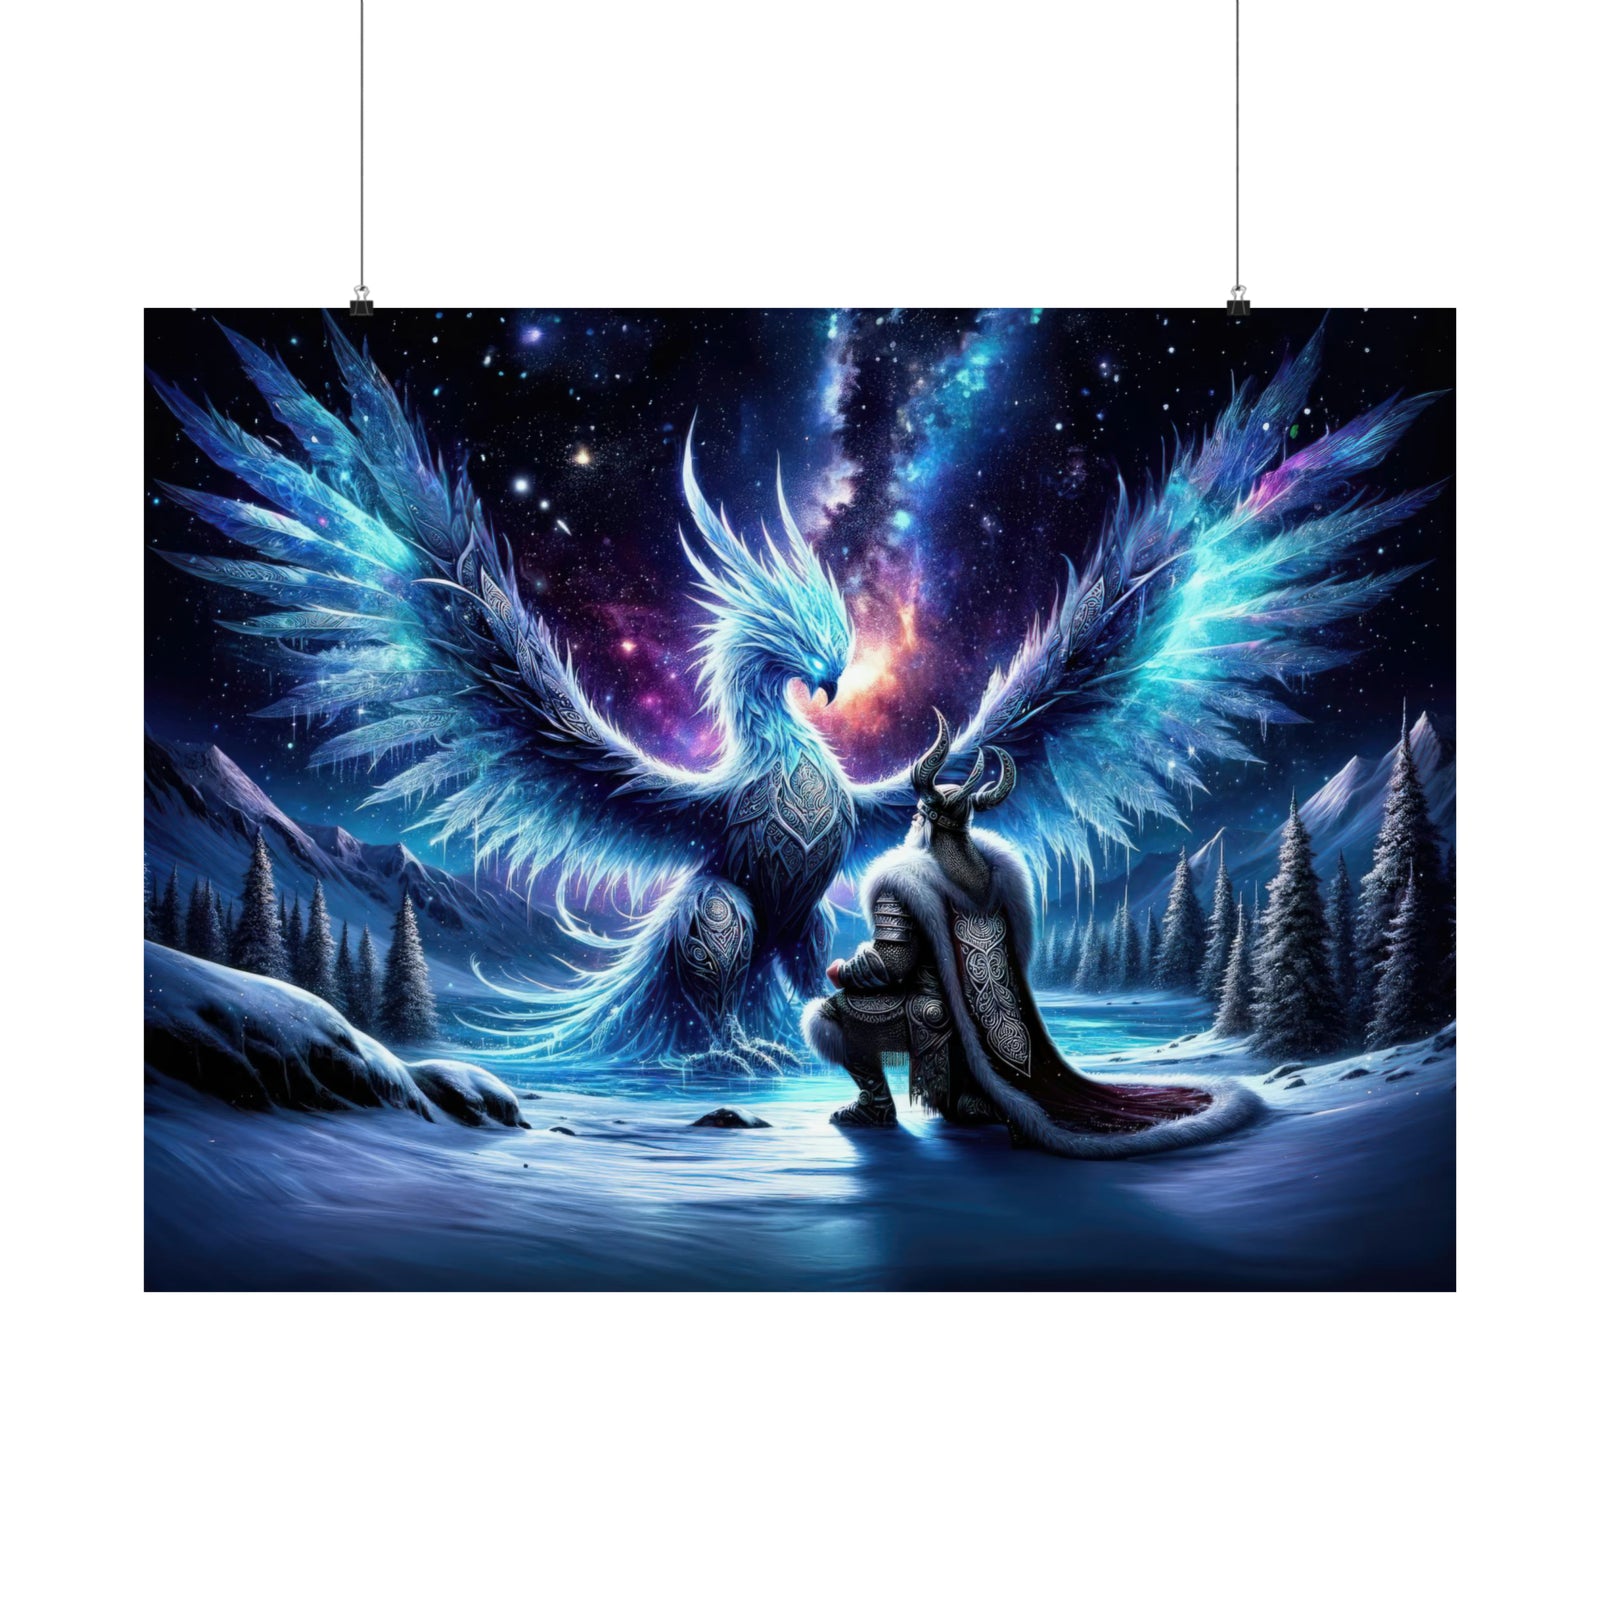 Stellar Guardian at Twilight's Veil Poster